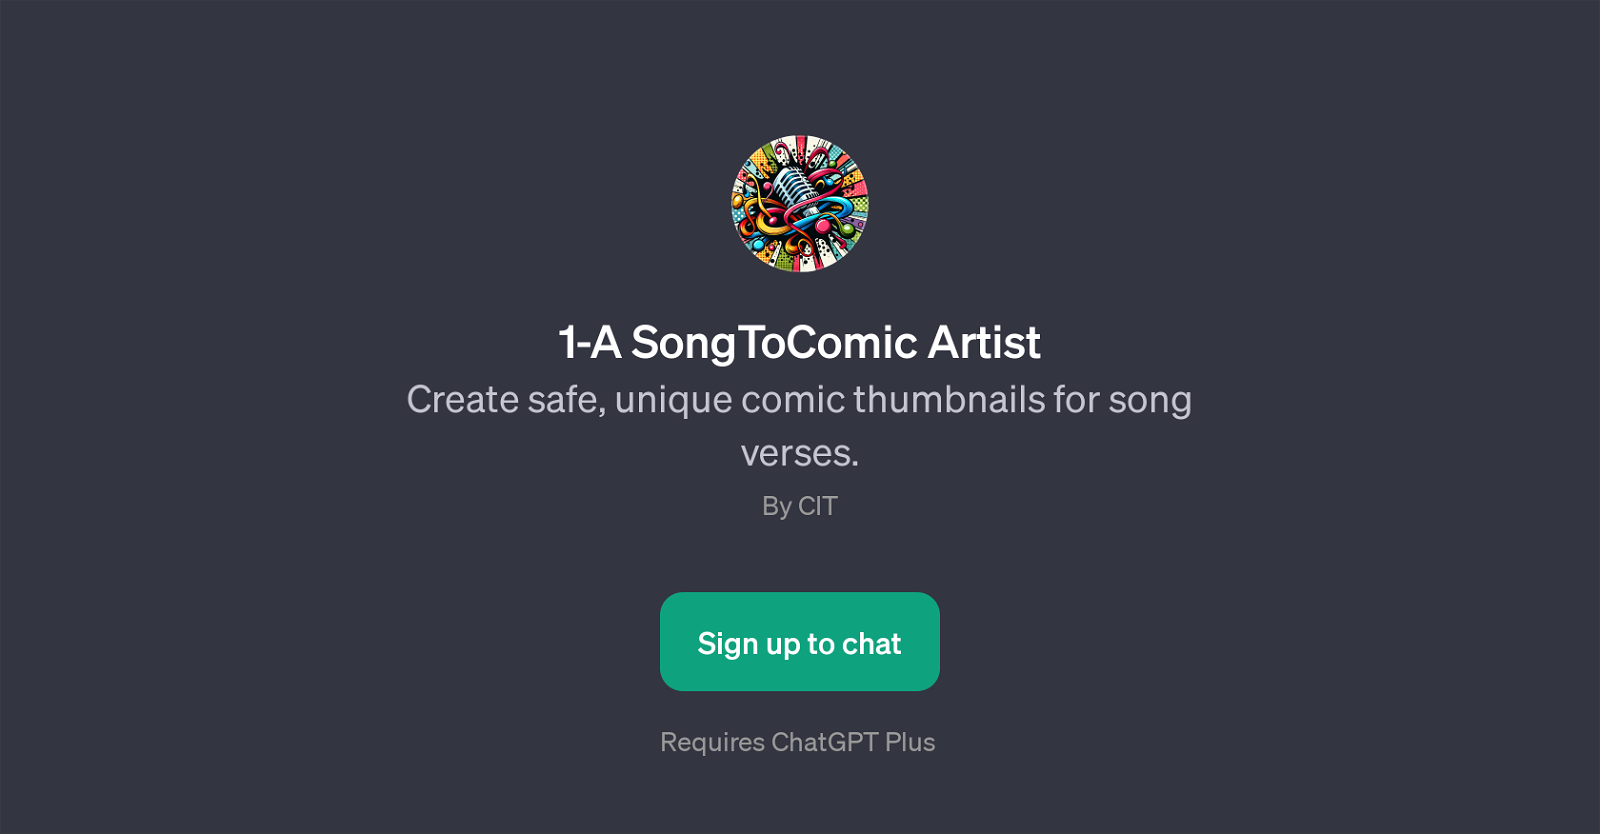 1-A SongToComic Artist website